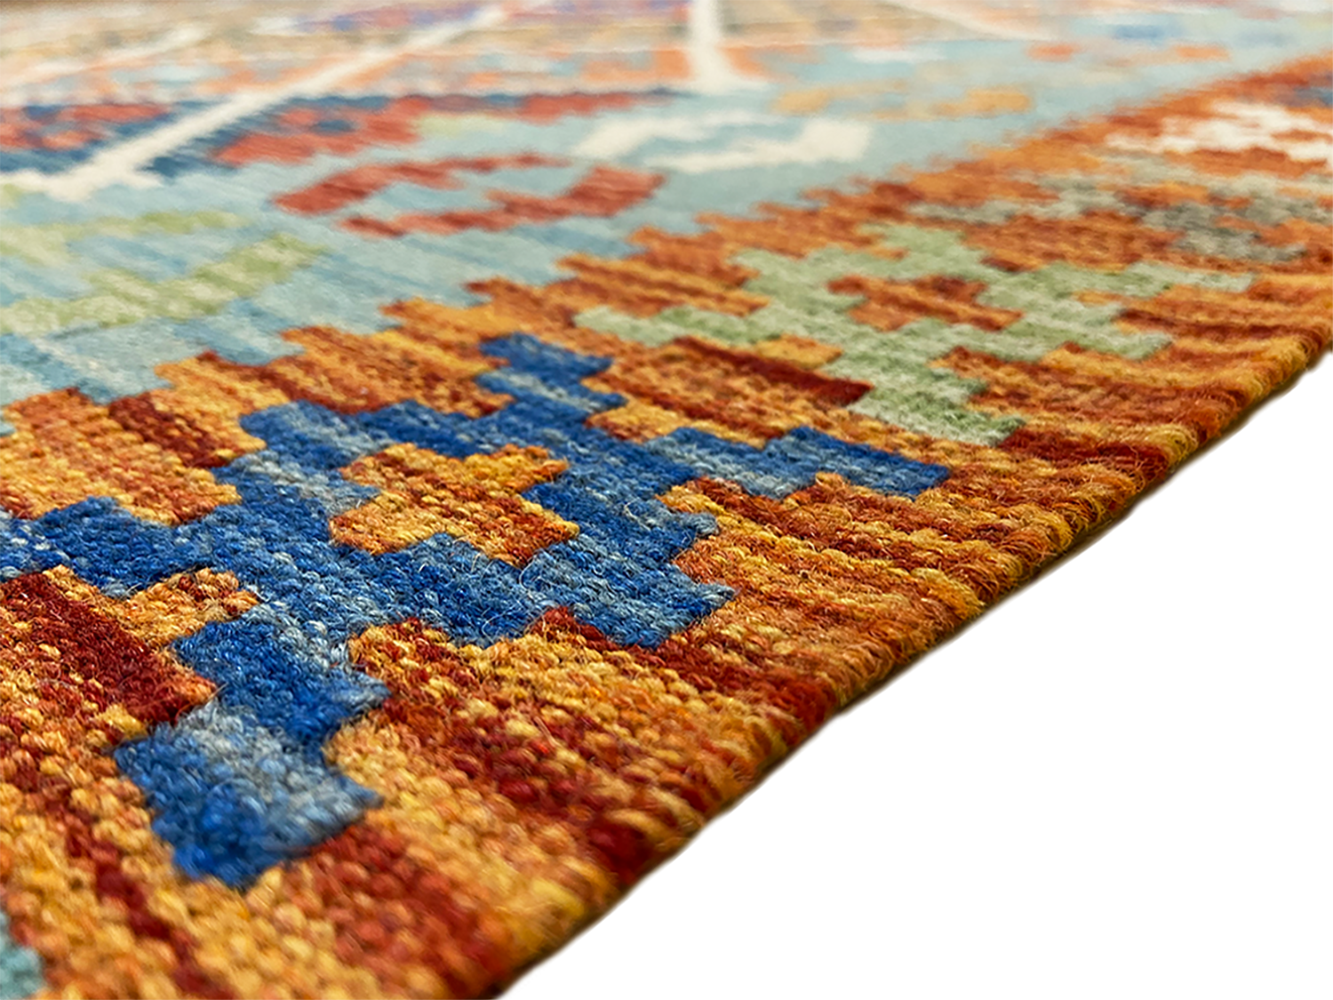 One-of-a-Kind Darlana Southwestern Handmade Kilim 5' 1" X 6' 8" Wool Orange Area Rug